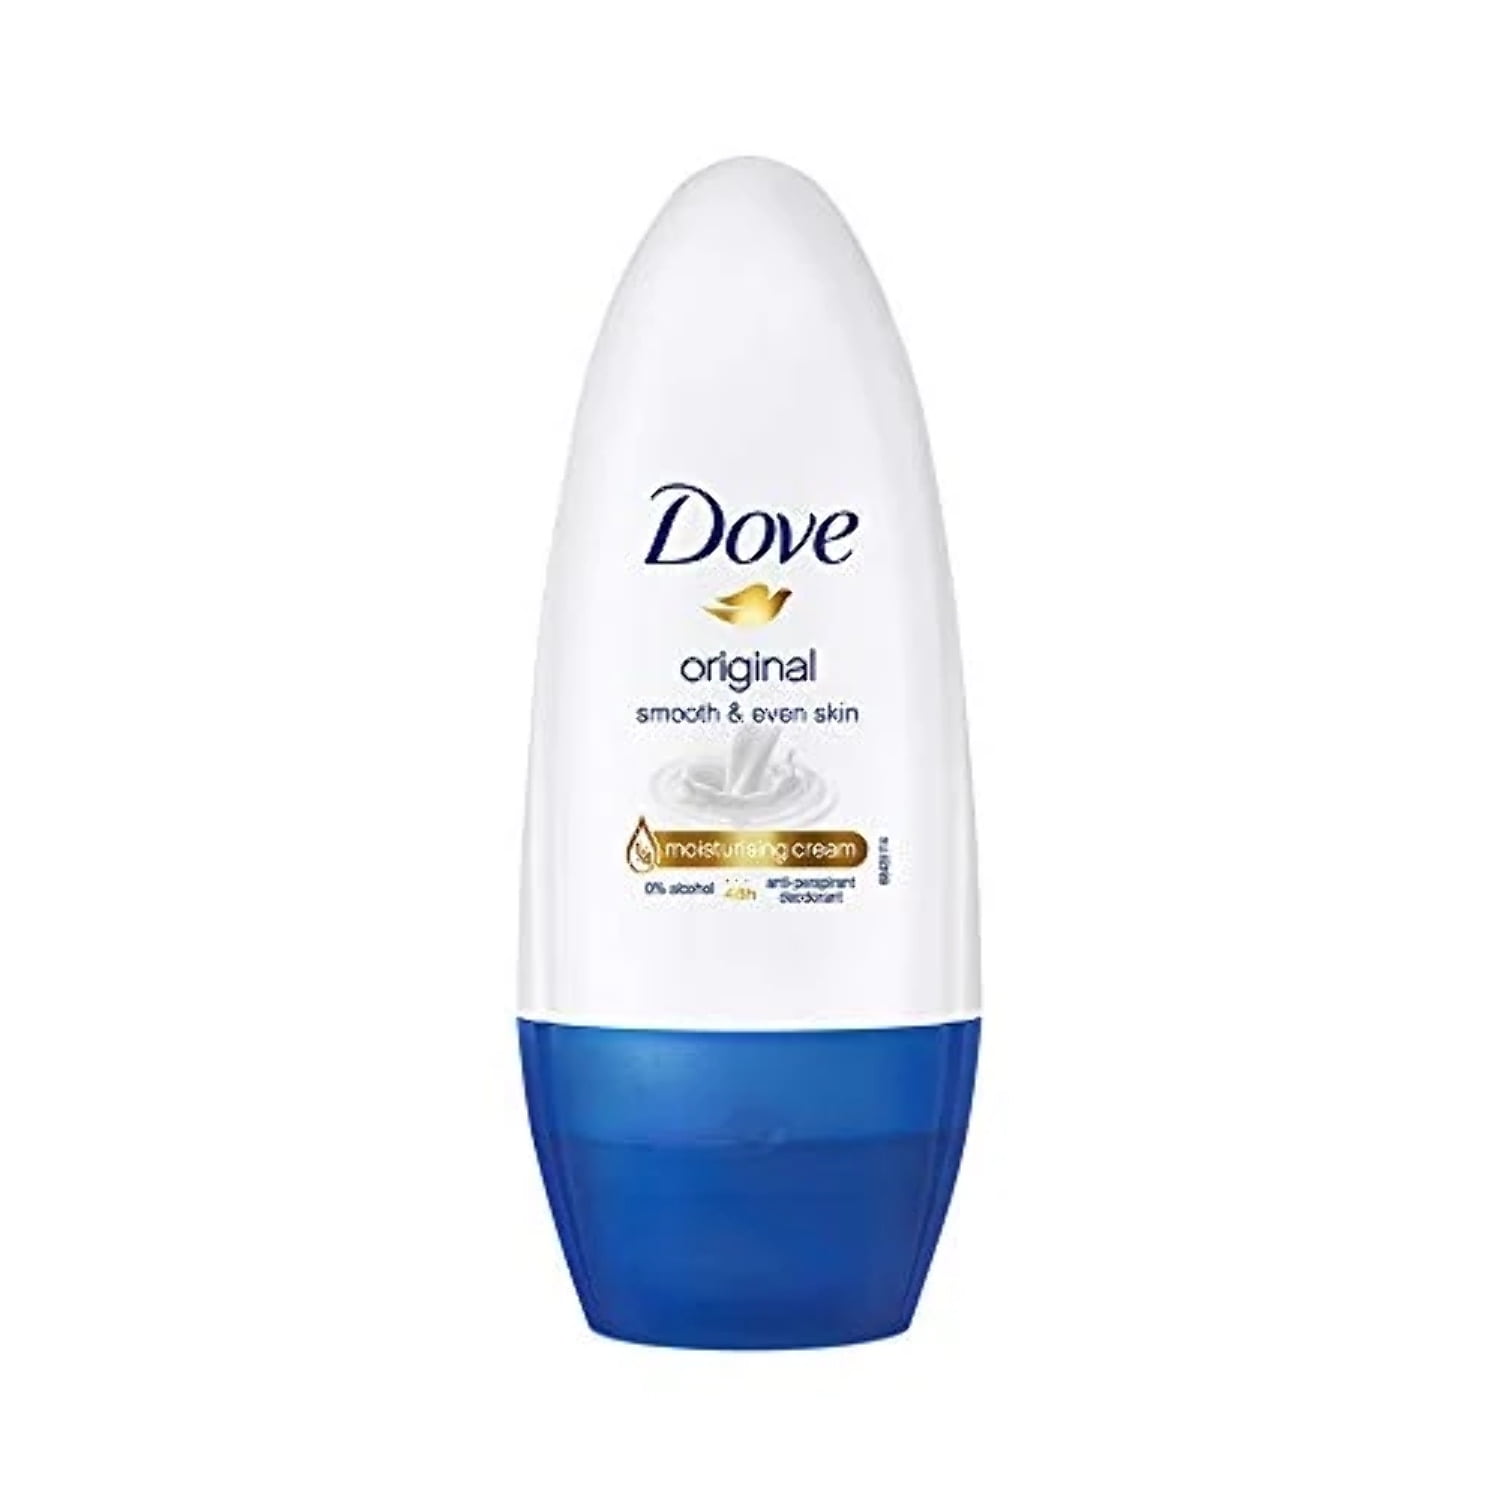 Dove Original Deodorant Roll On For Women, Antiperspirant Underarm Roll On Odour, Keeps Skin Fresh Clean, Alcohol Free, Paraben 50 ml Walmart.com